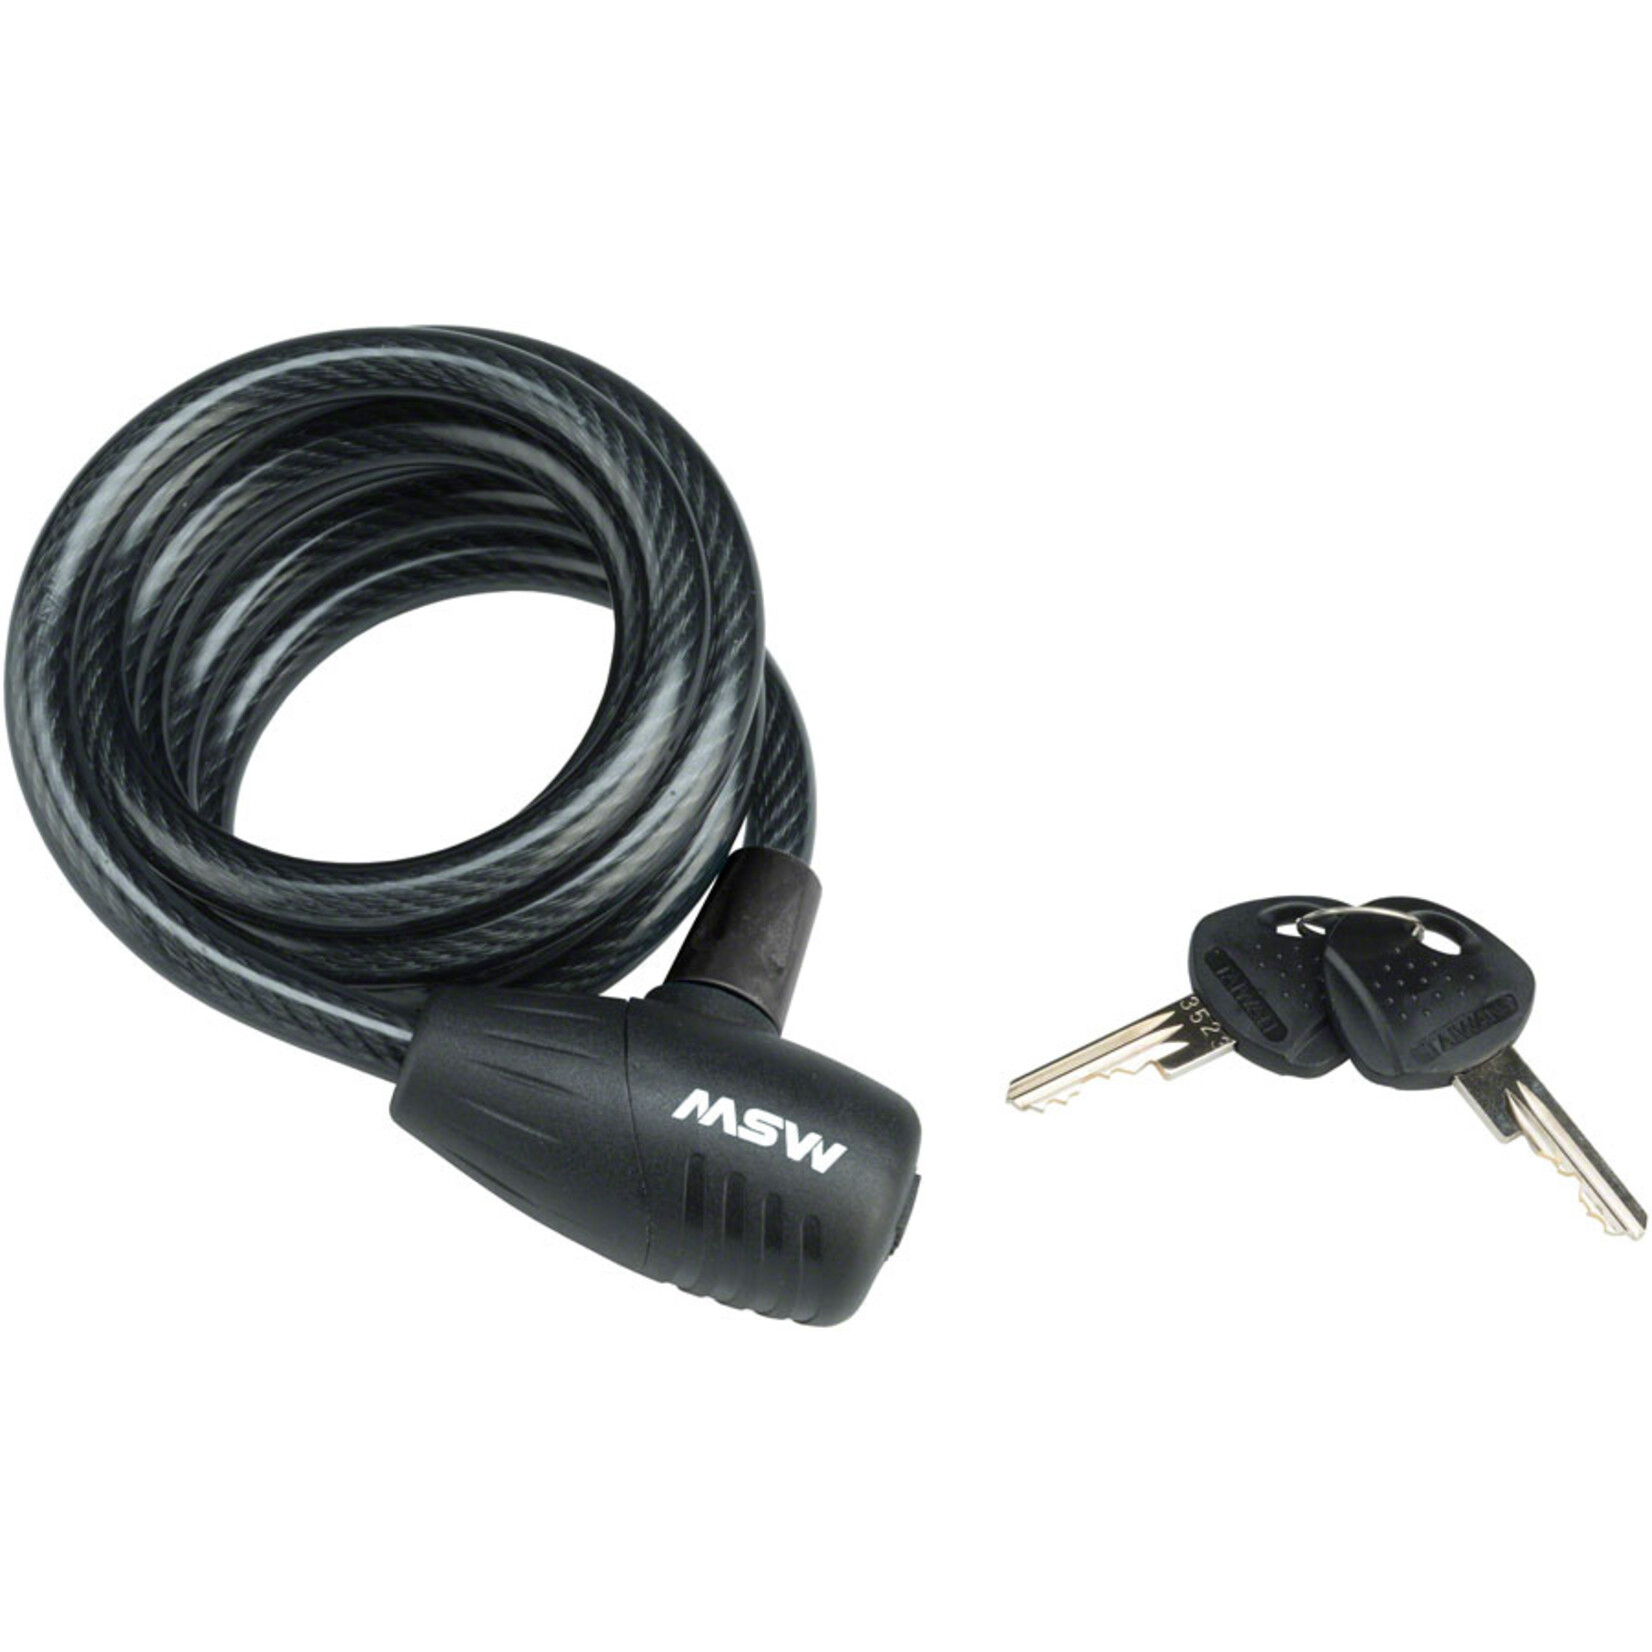 MSW KLK-110 Keyed Cable Lock, 10mm x 6', Black